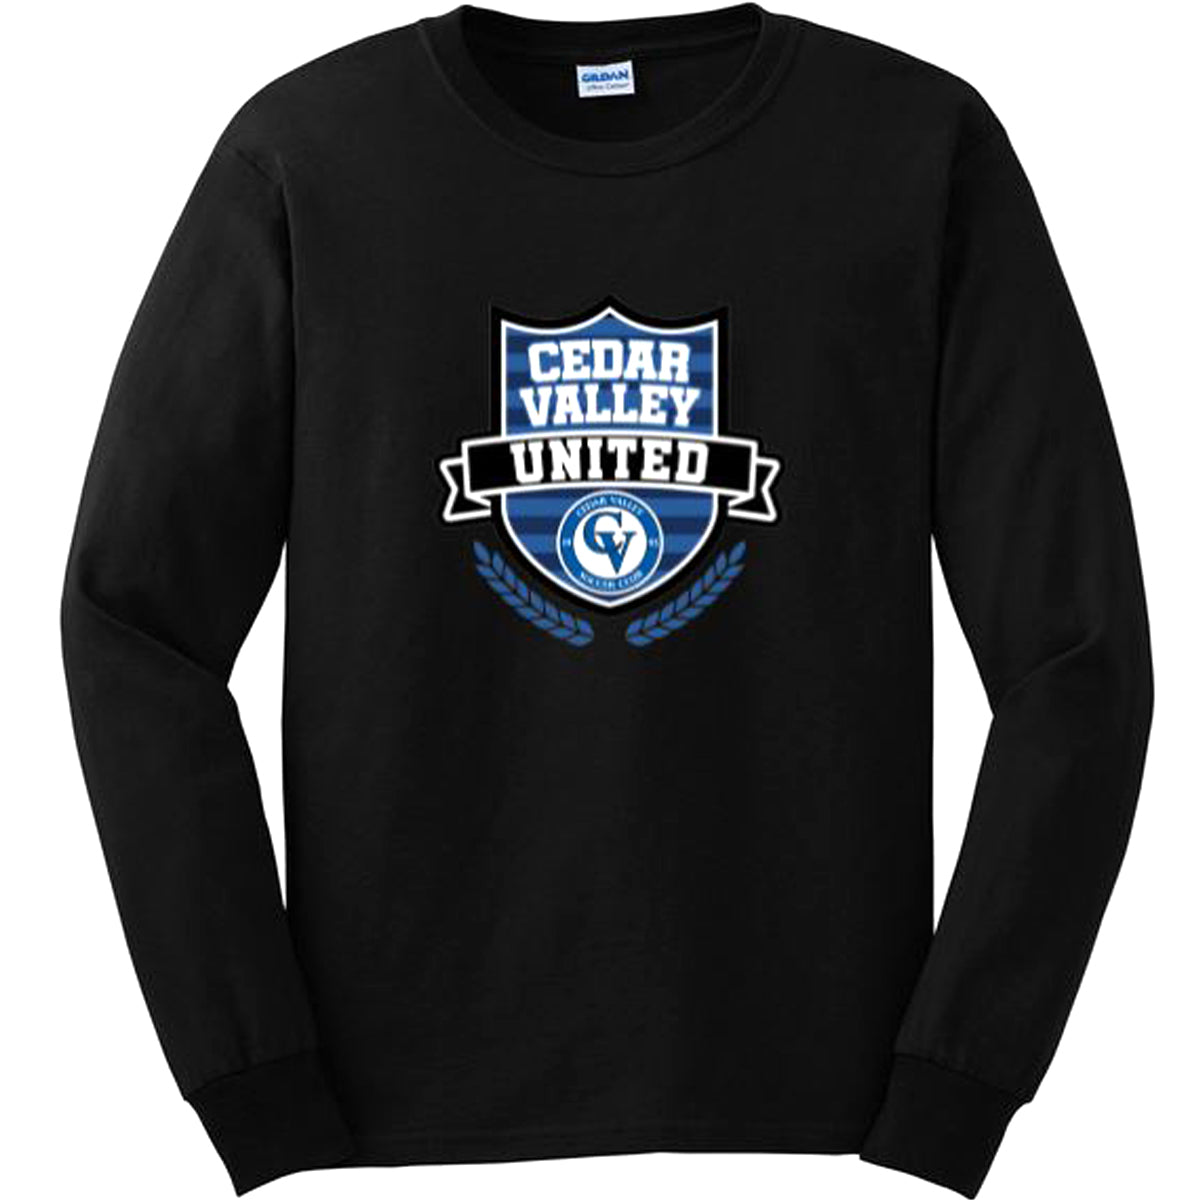 Cedar Valley Soccer Club Ultra Cotton 100% Cotton Long Sleeve T-Shirt Sweatshirt Gildan Men's Small Black 